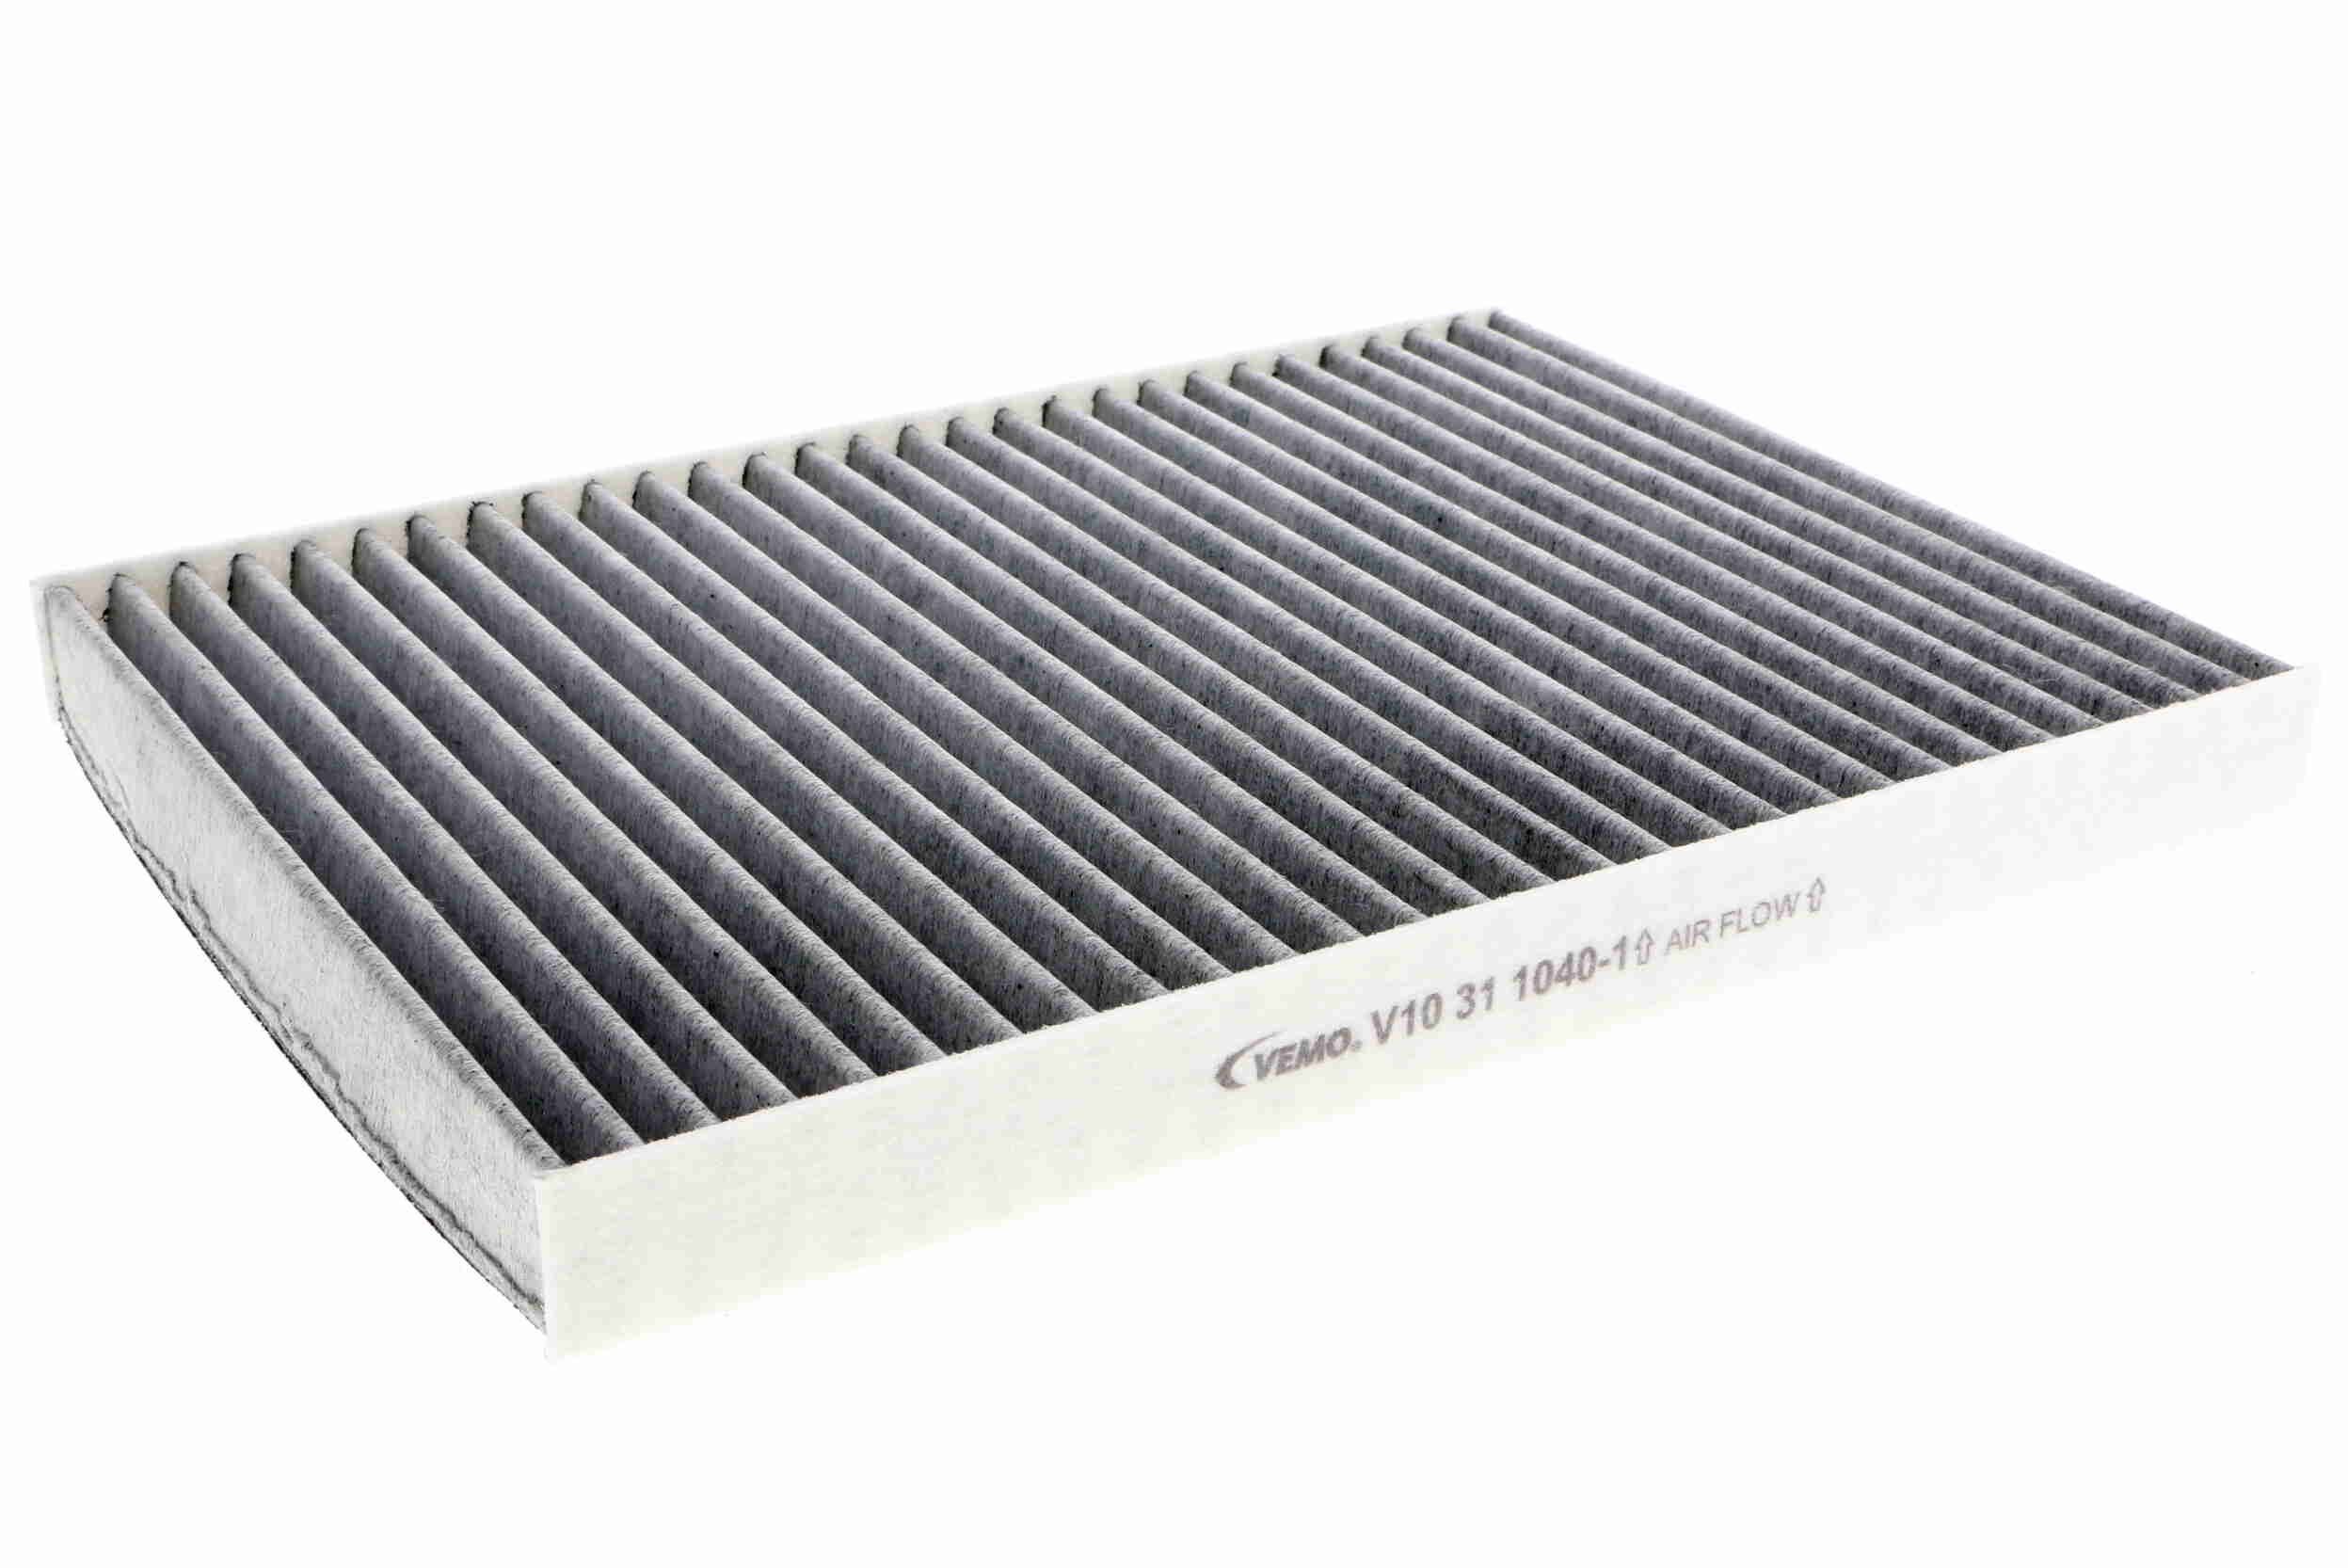 V10-31-1040-1 VEMO Pollen filter AUDI Activated Carbon Filter, 281, 283 mm x 206 mm x 30, 25 mm, Activated Carbon